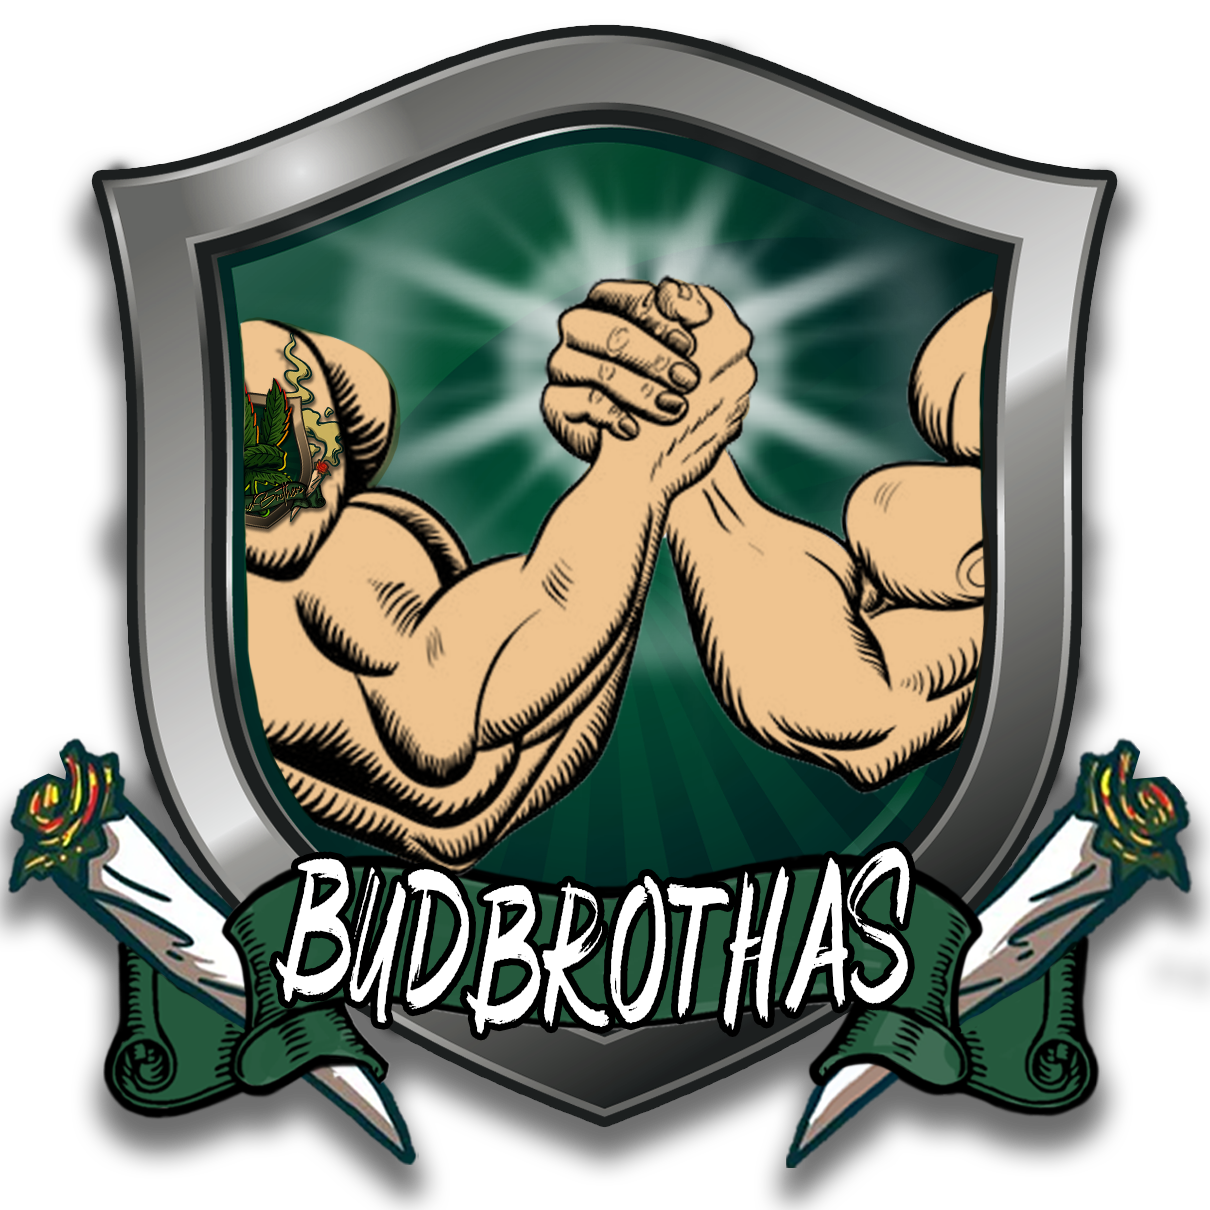 Budbrothas